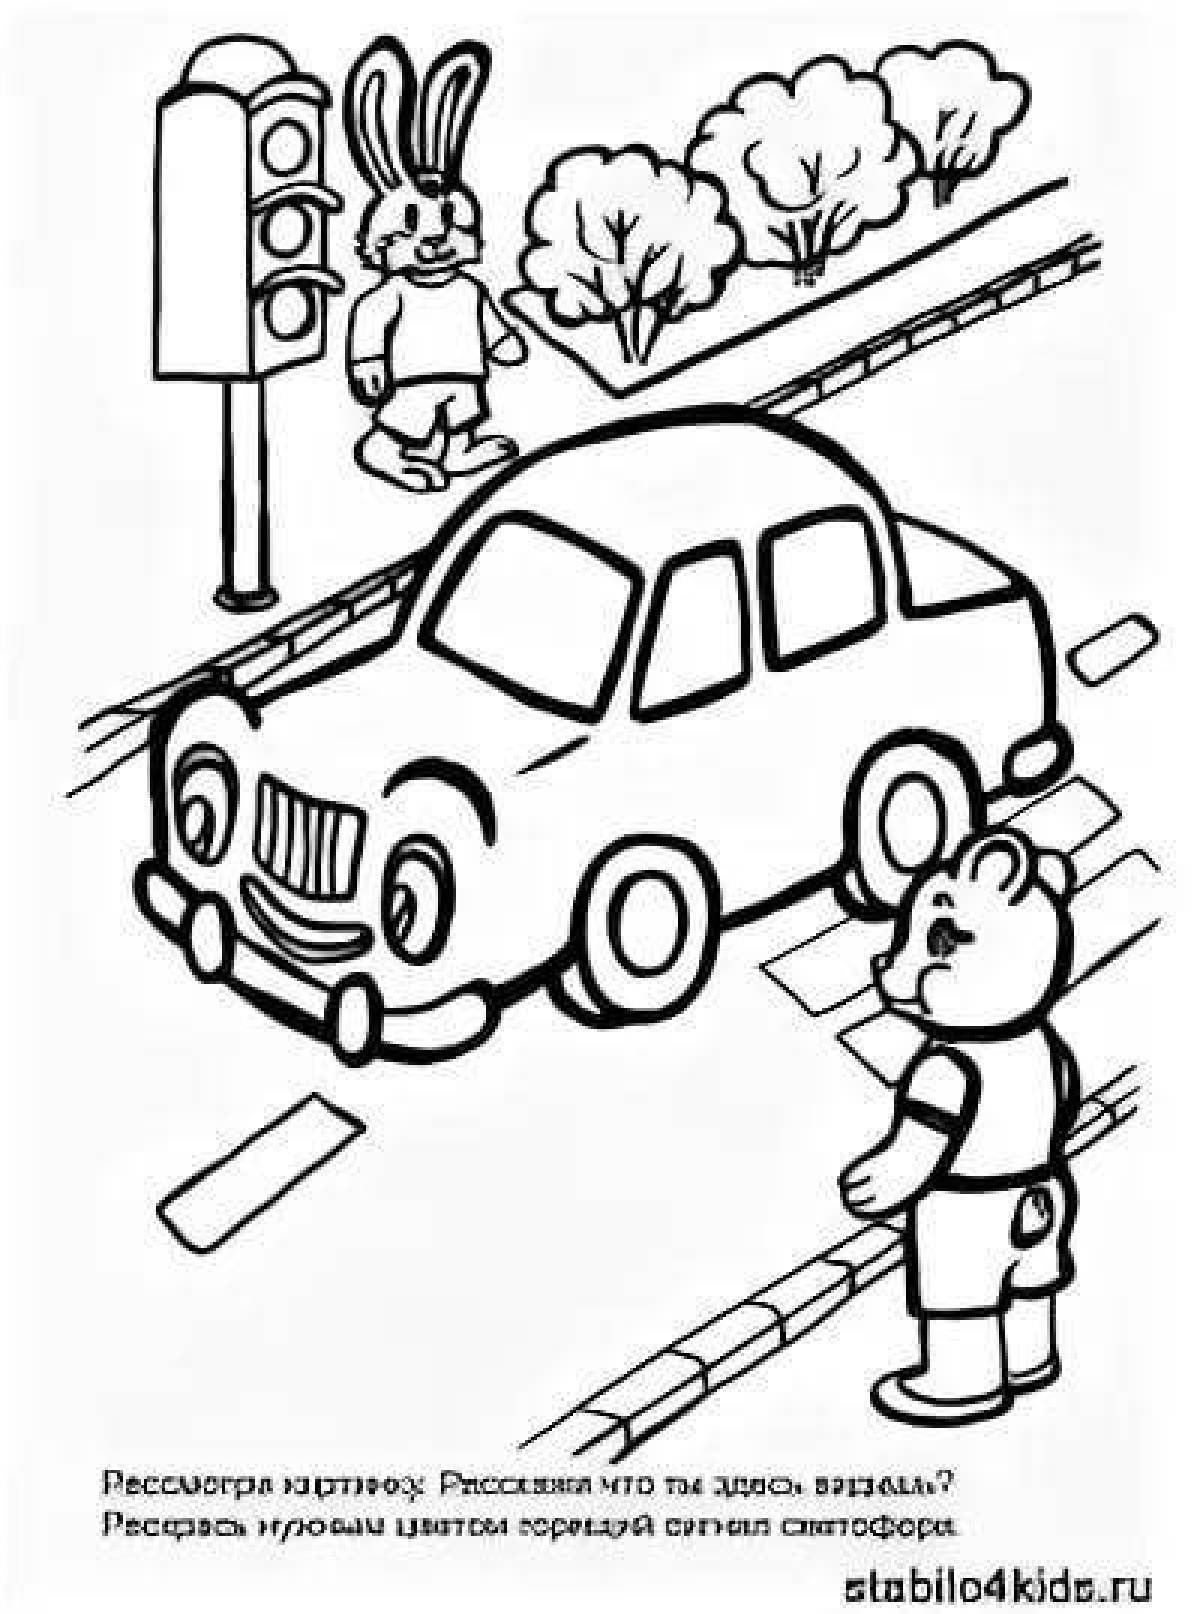 Traffic rules for preschool children #1